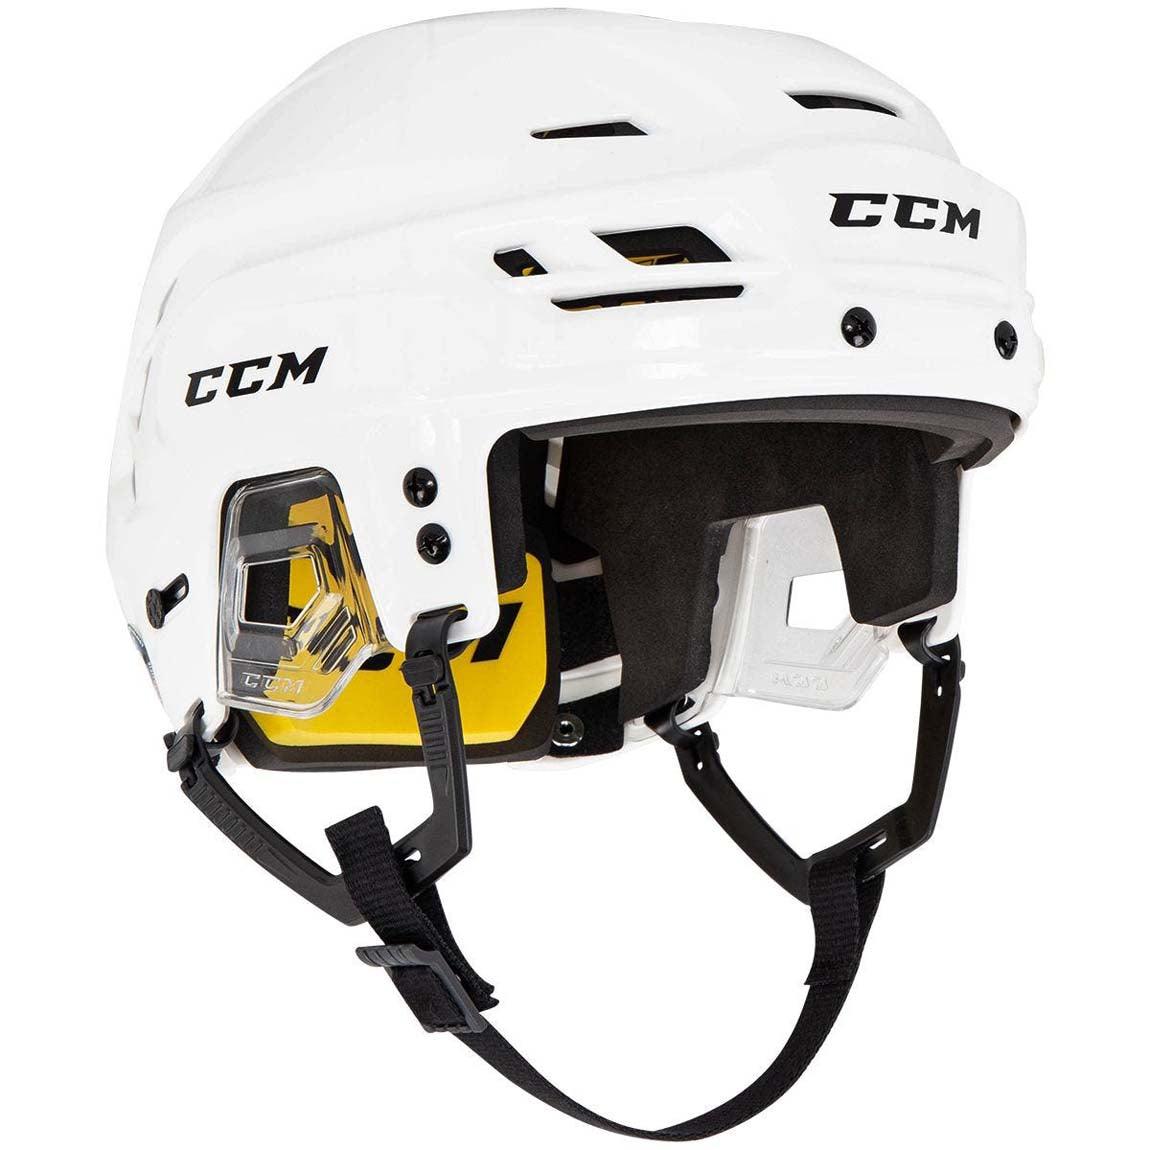 Tacks 210 Hockey Helmet - Senior - Sports Excellence